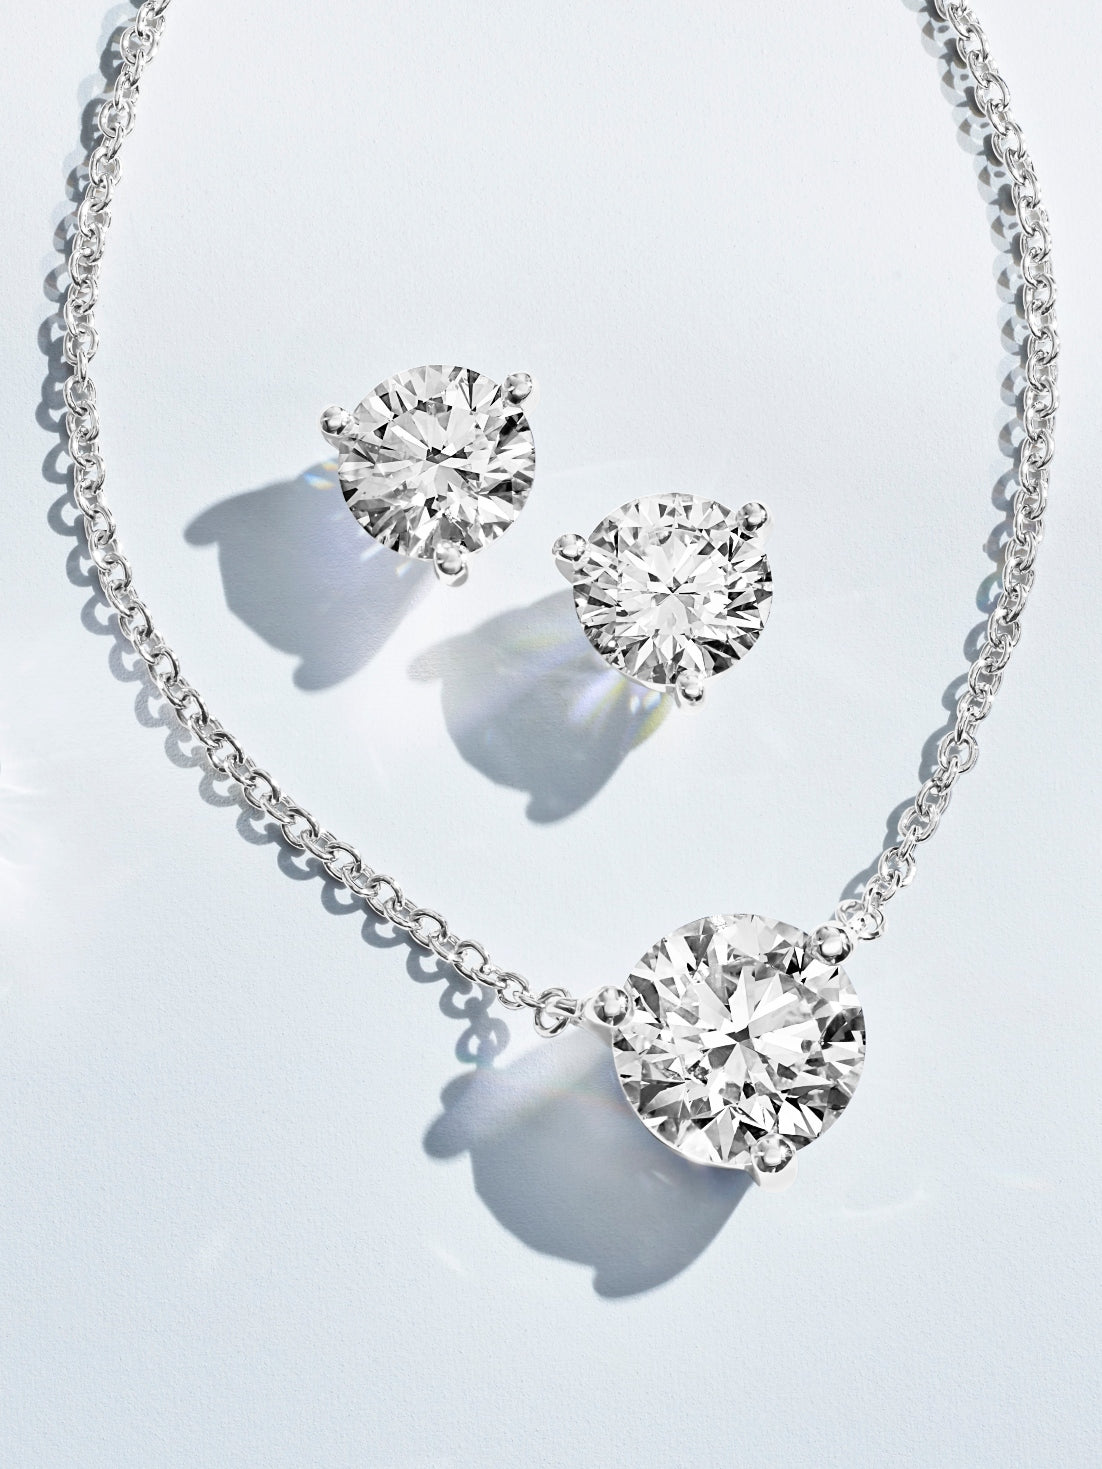 Round brilliant white lab-grown diamond earrings and pendant set